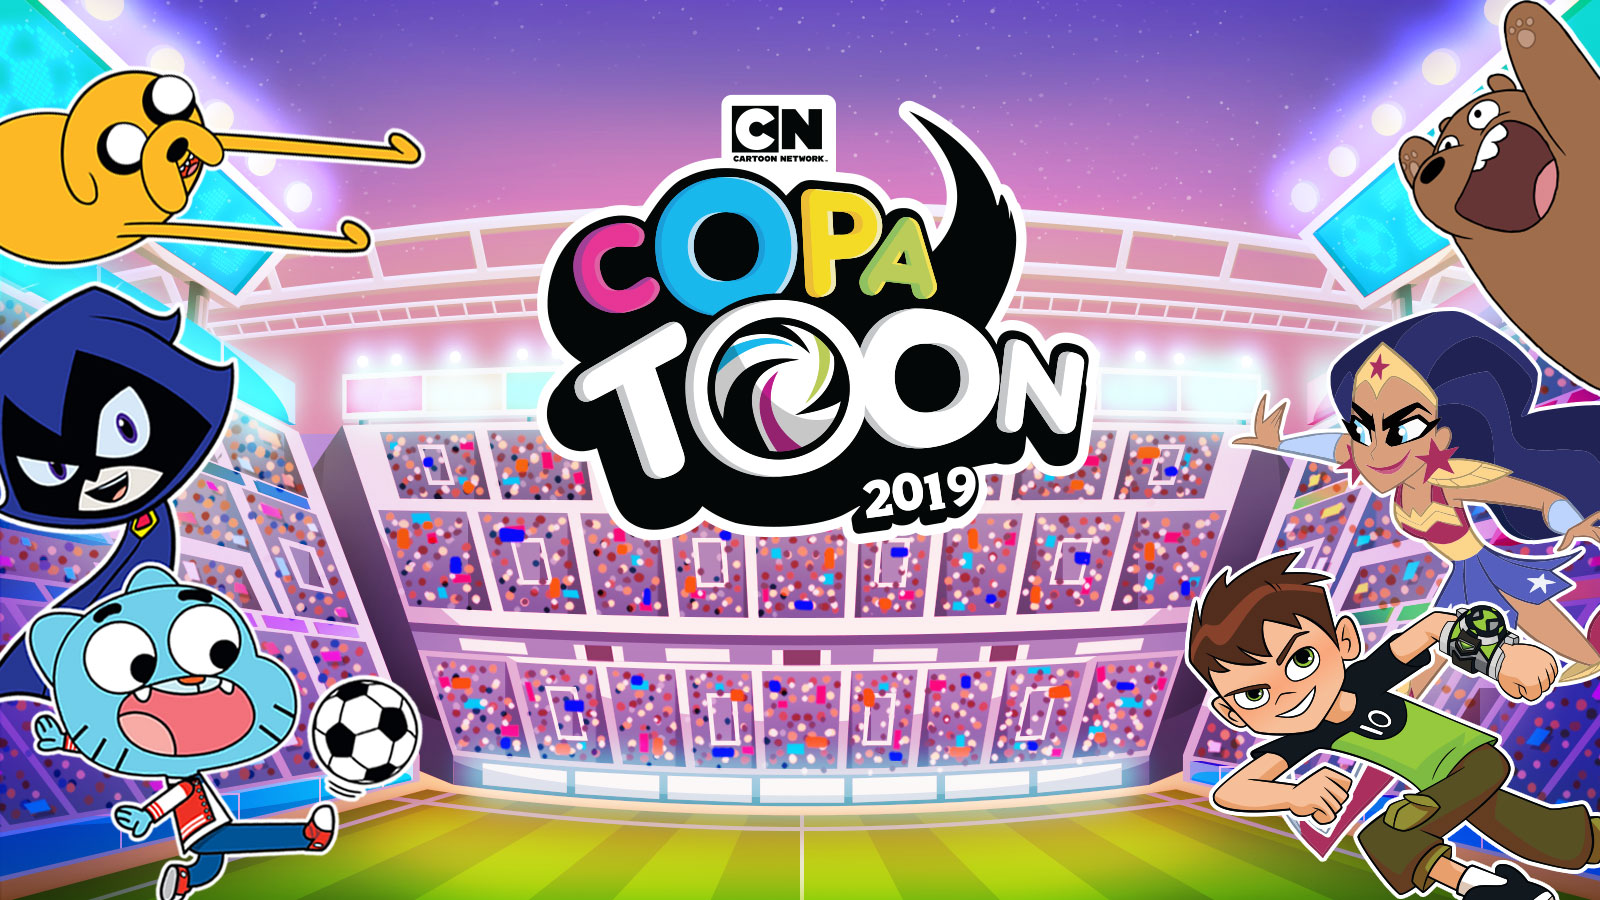 Copa Toon 2019 | Cartoon Network